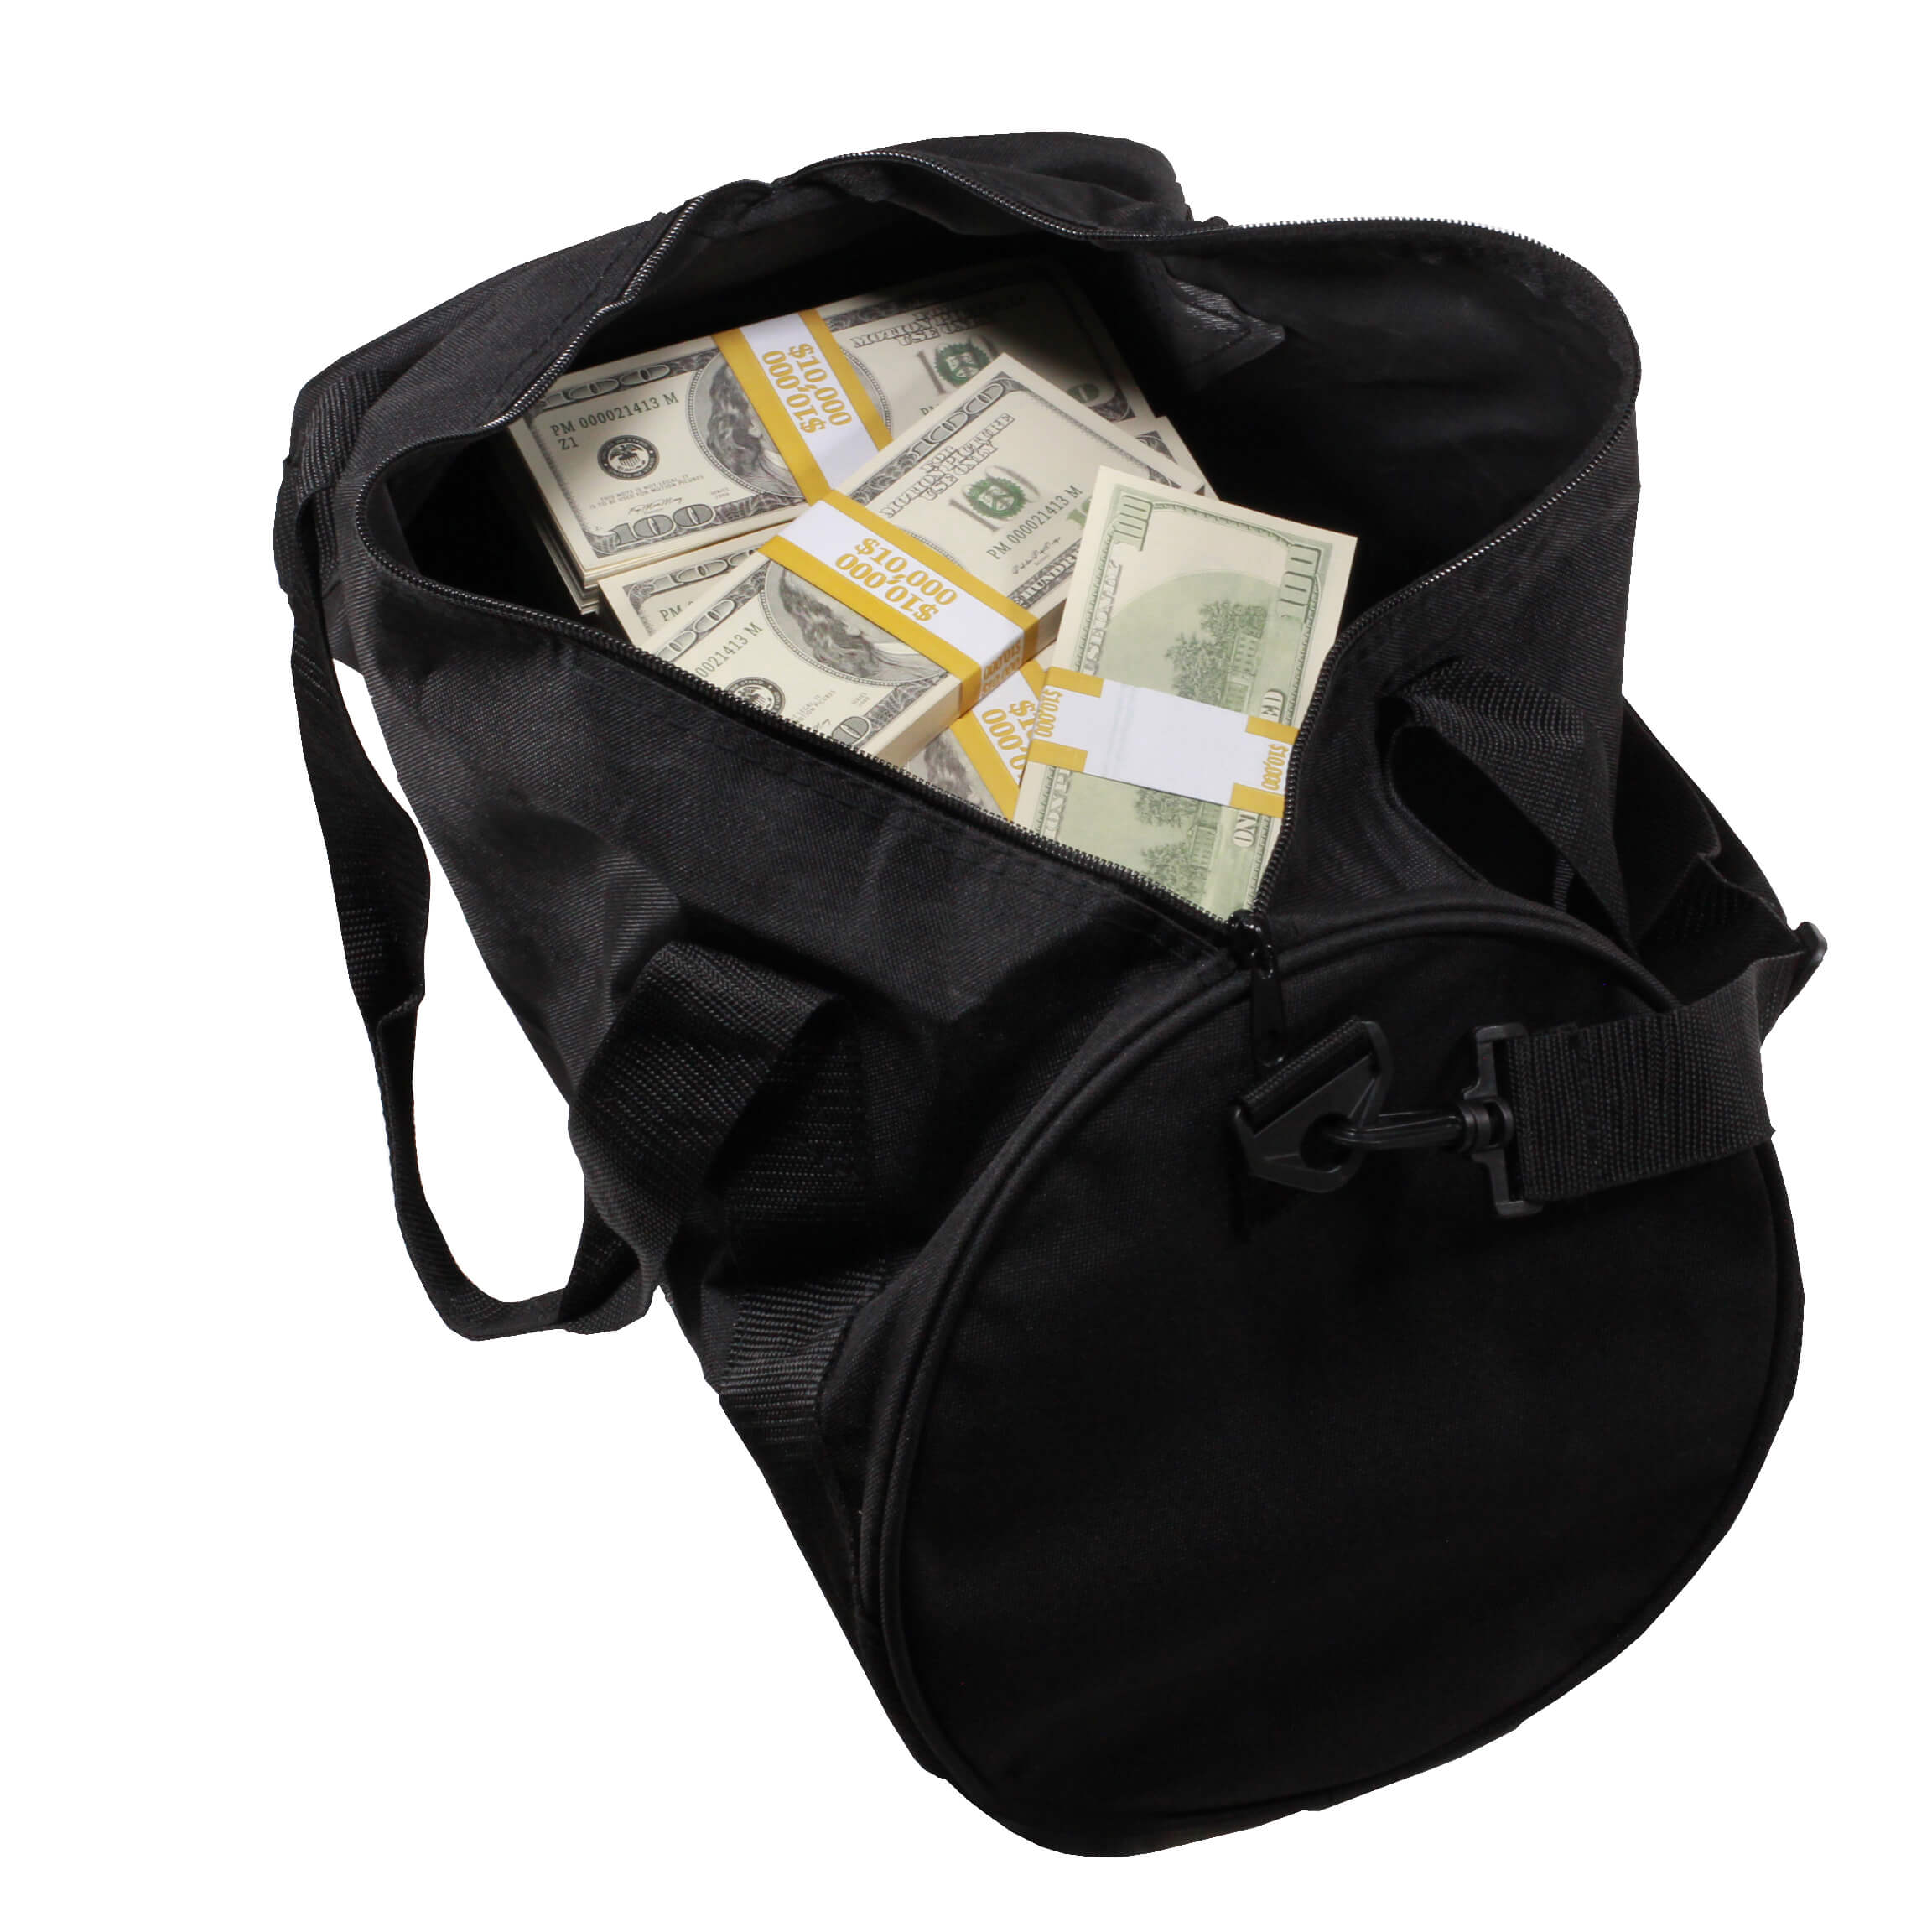 New Series $1,000,000 Blank Filler Duffel Bag